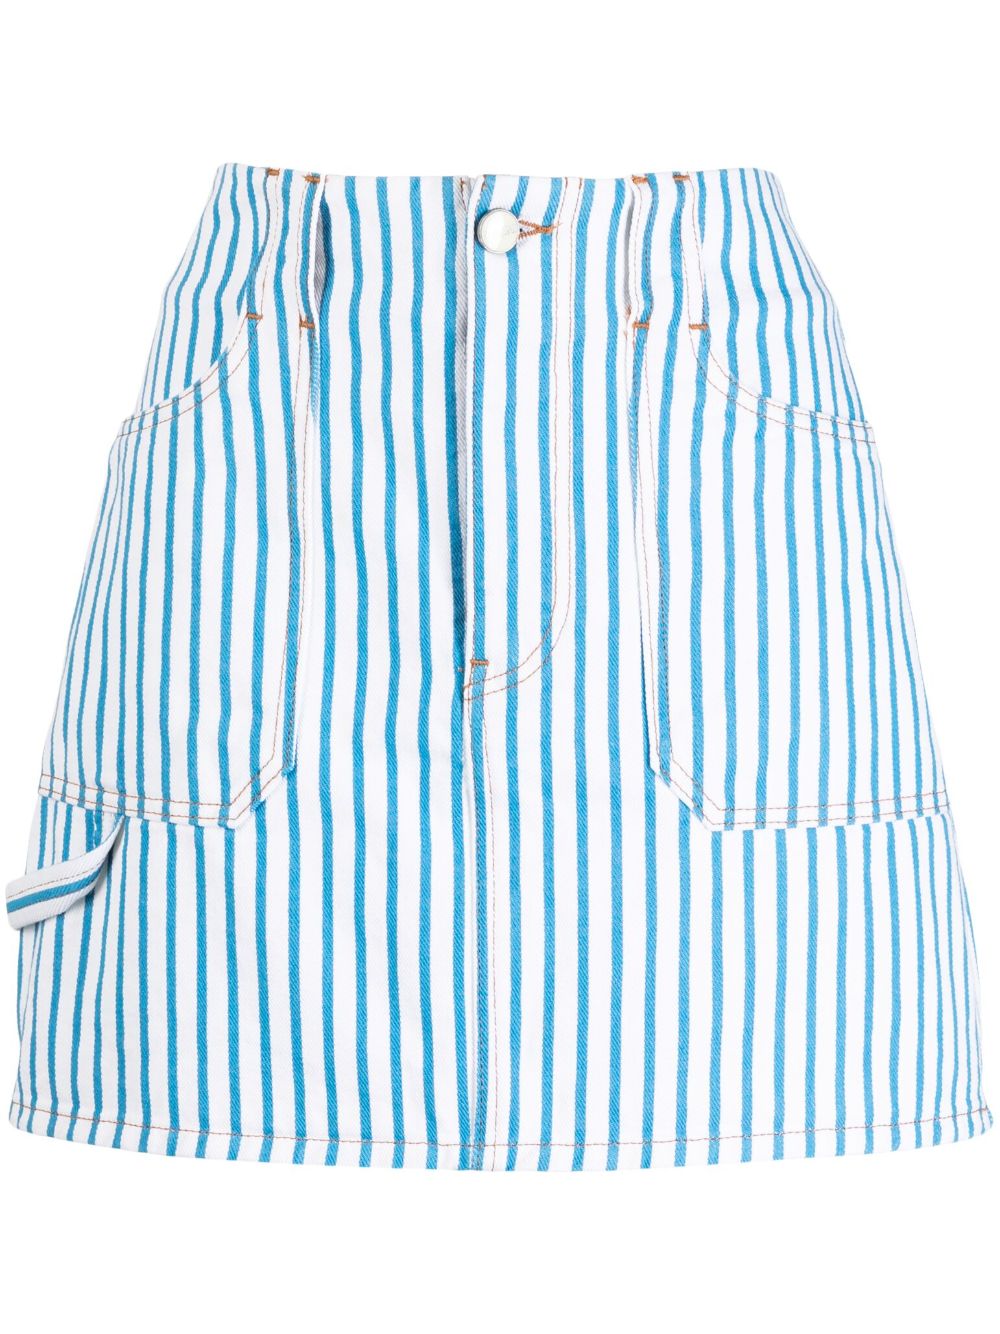 Image 1 of GANNI striped denim skirt